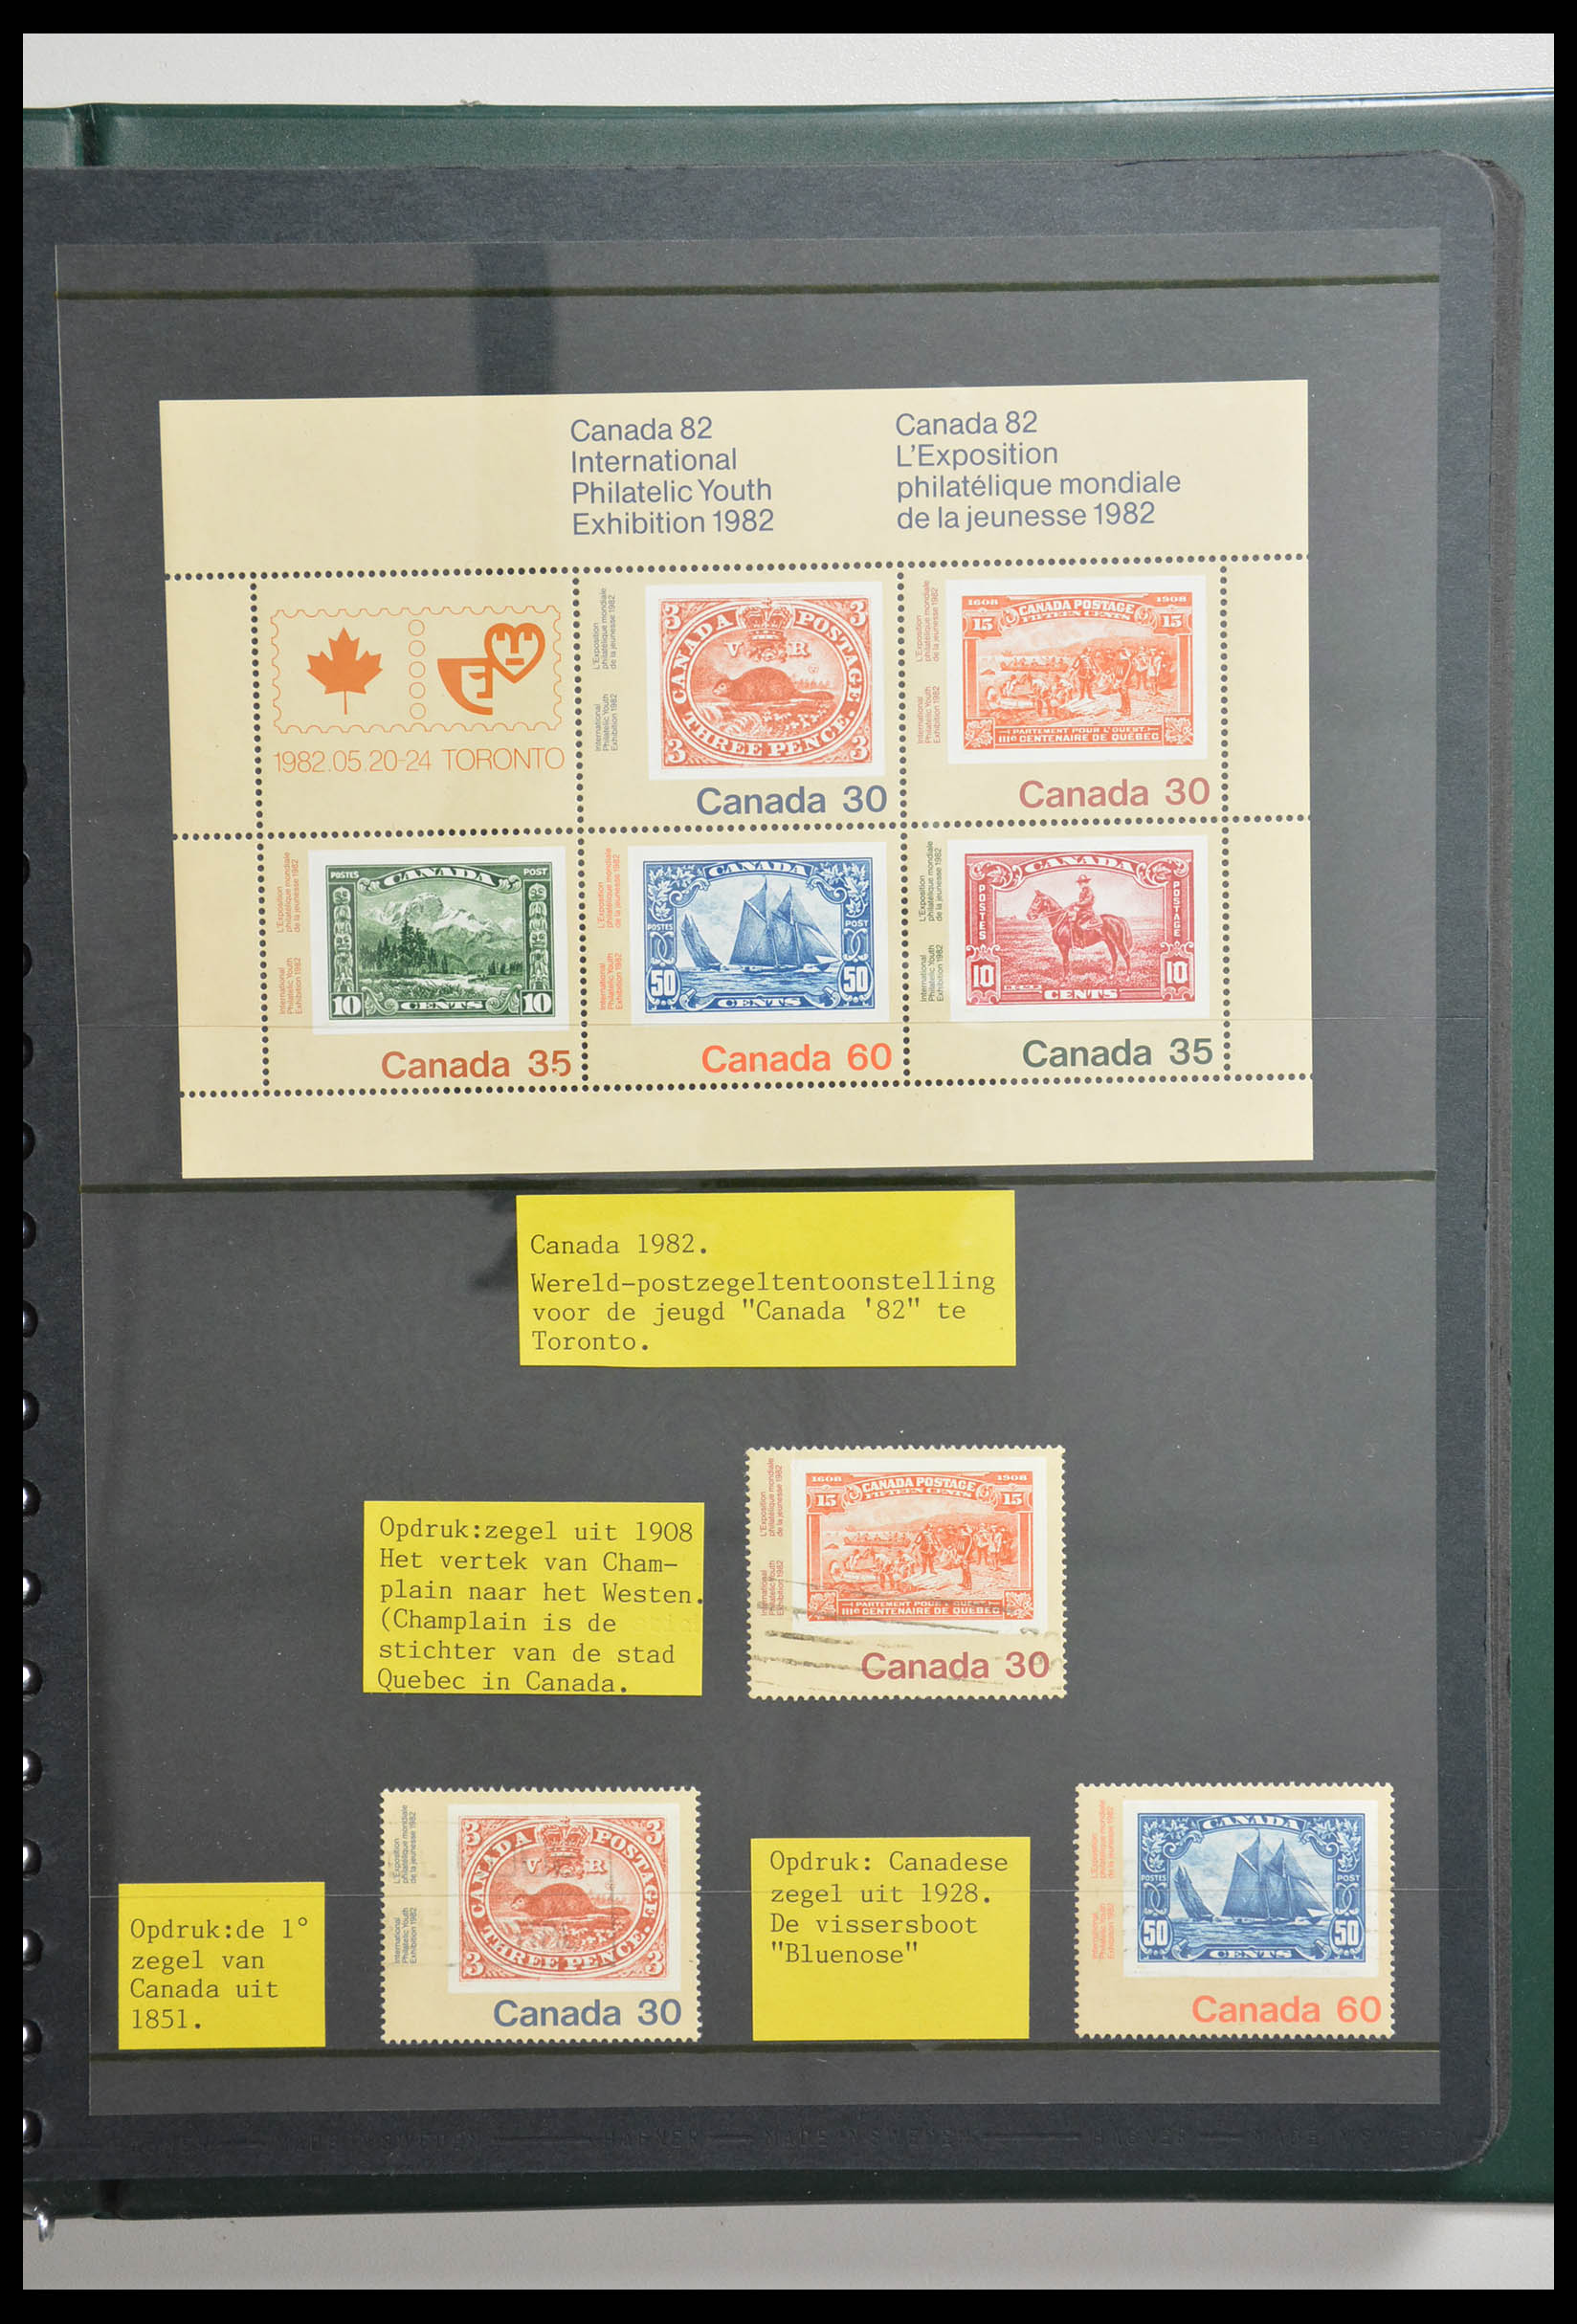 28337 097 - 28337 Postzegel op postzegel 1840-2001.